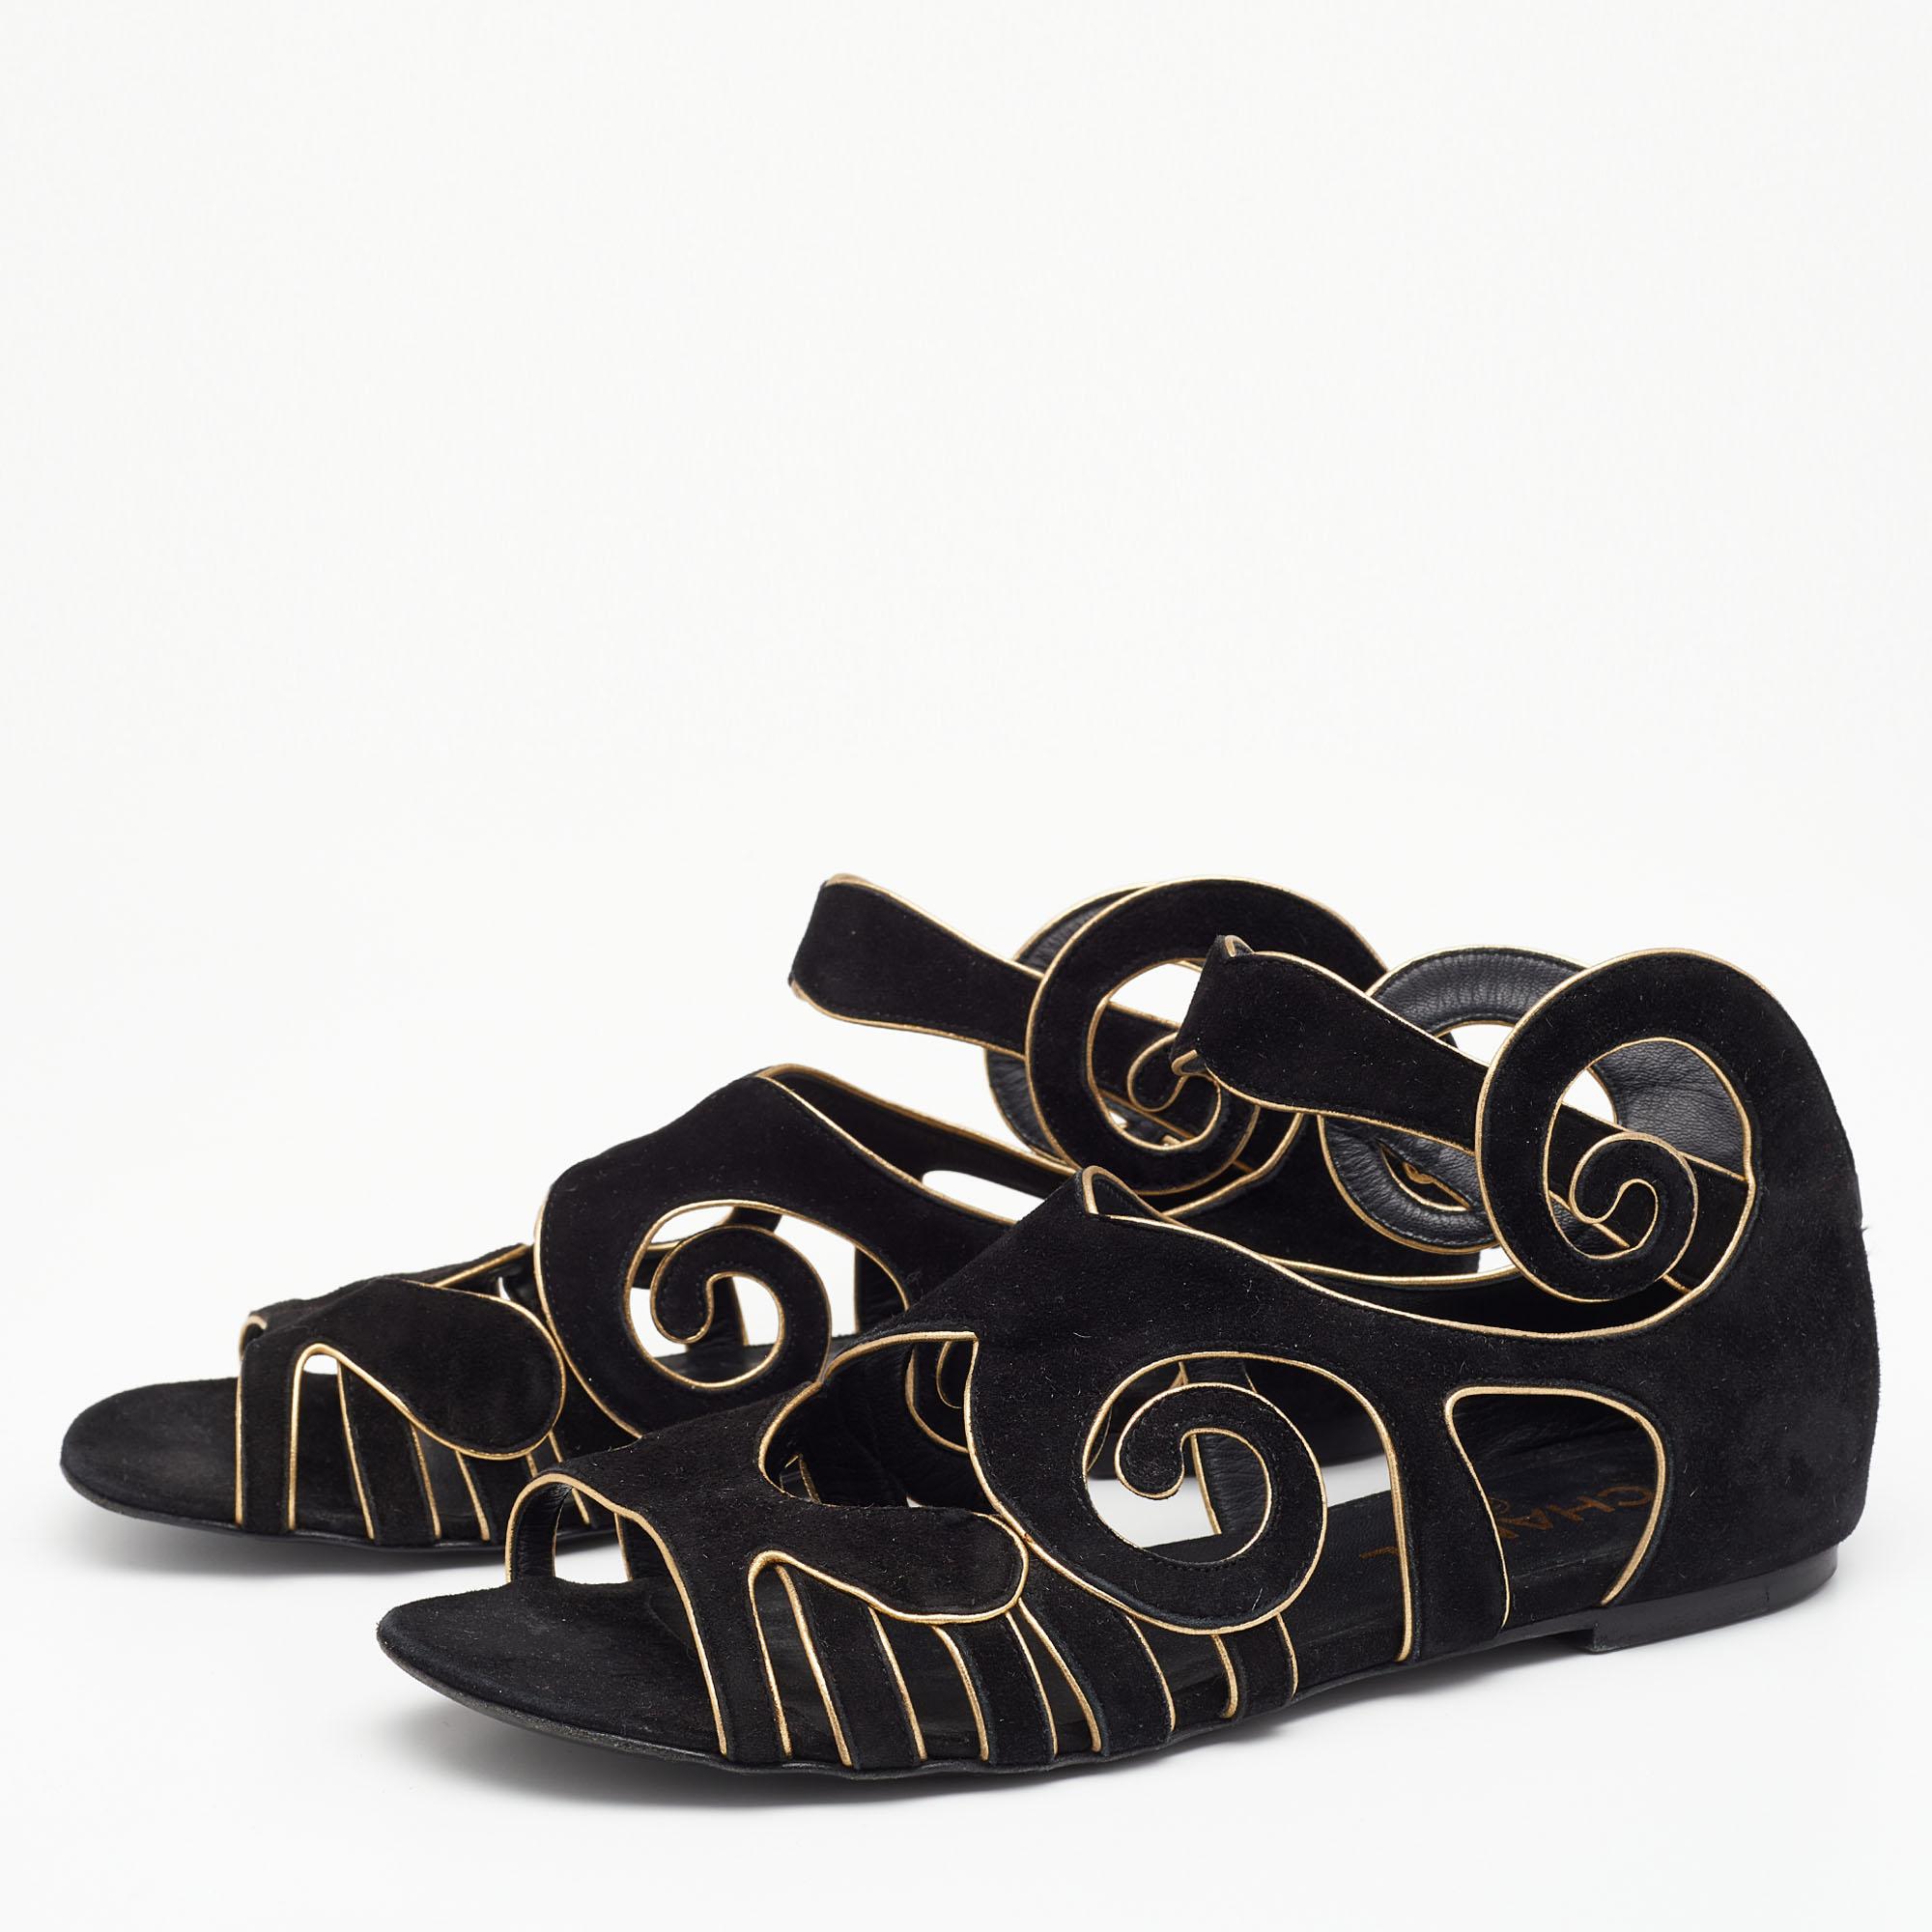 Women's Chanel Black/Gold Suede Gladiator Flat Sandals Size 38.5